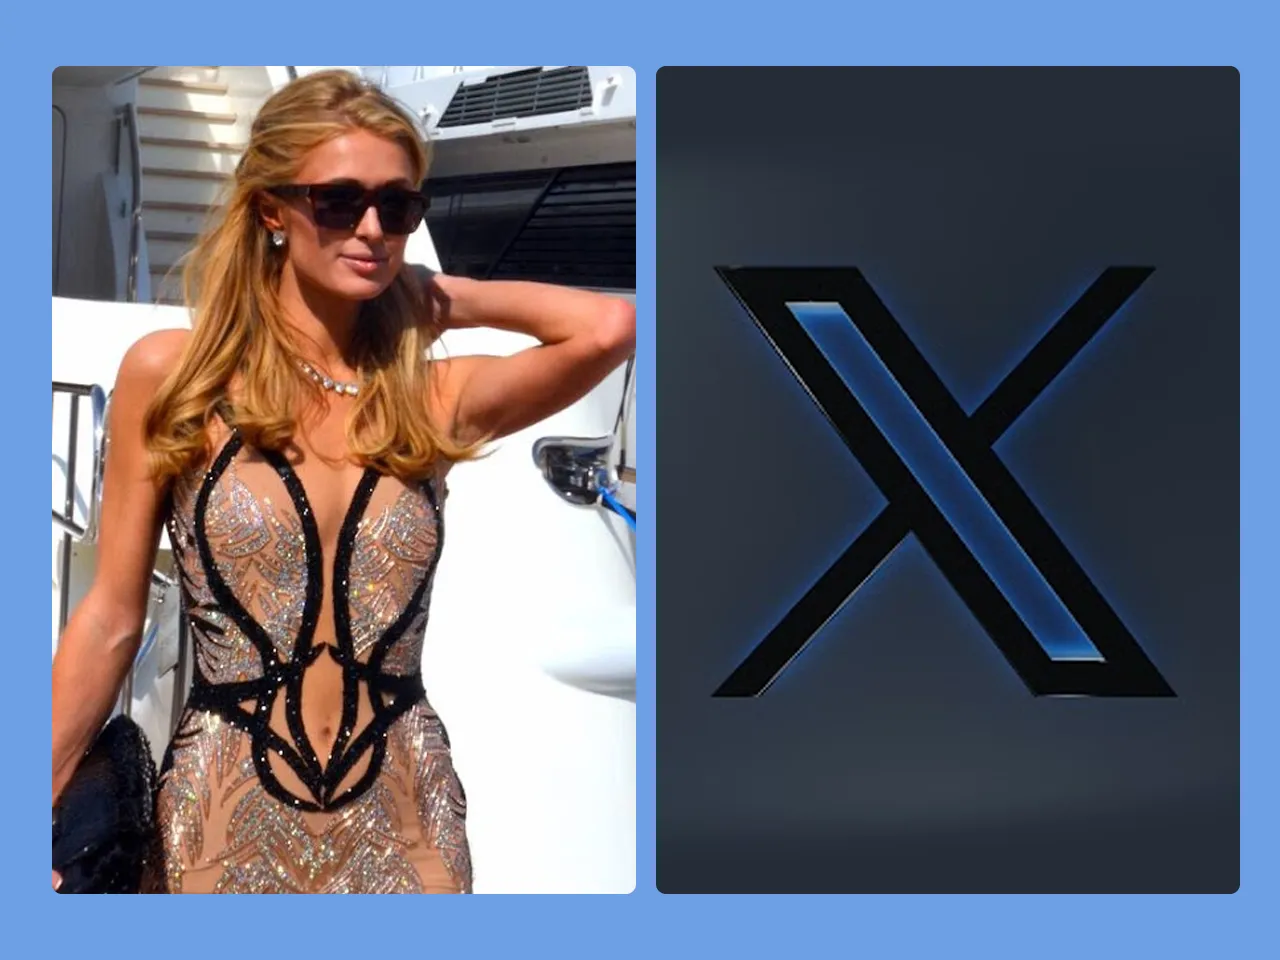 Paris Hilton enters into an exclusive content deal with X